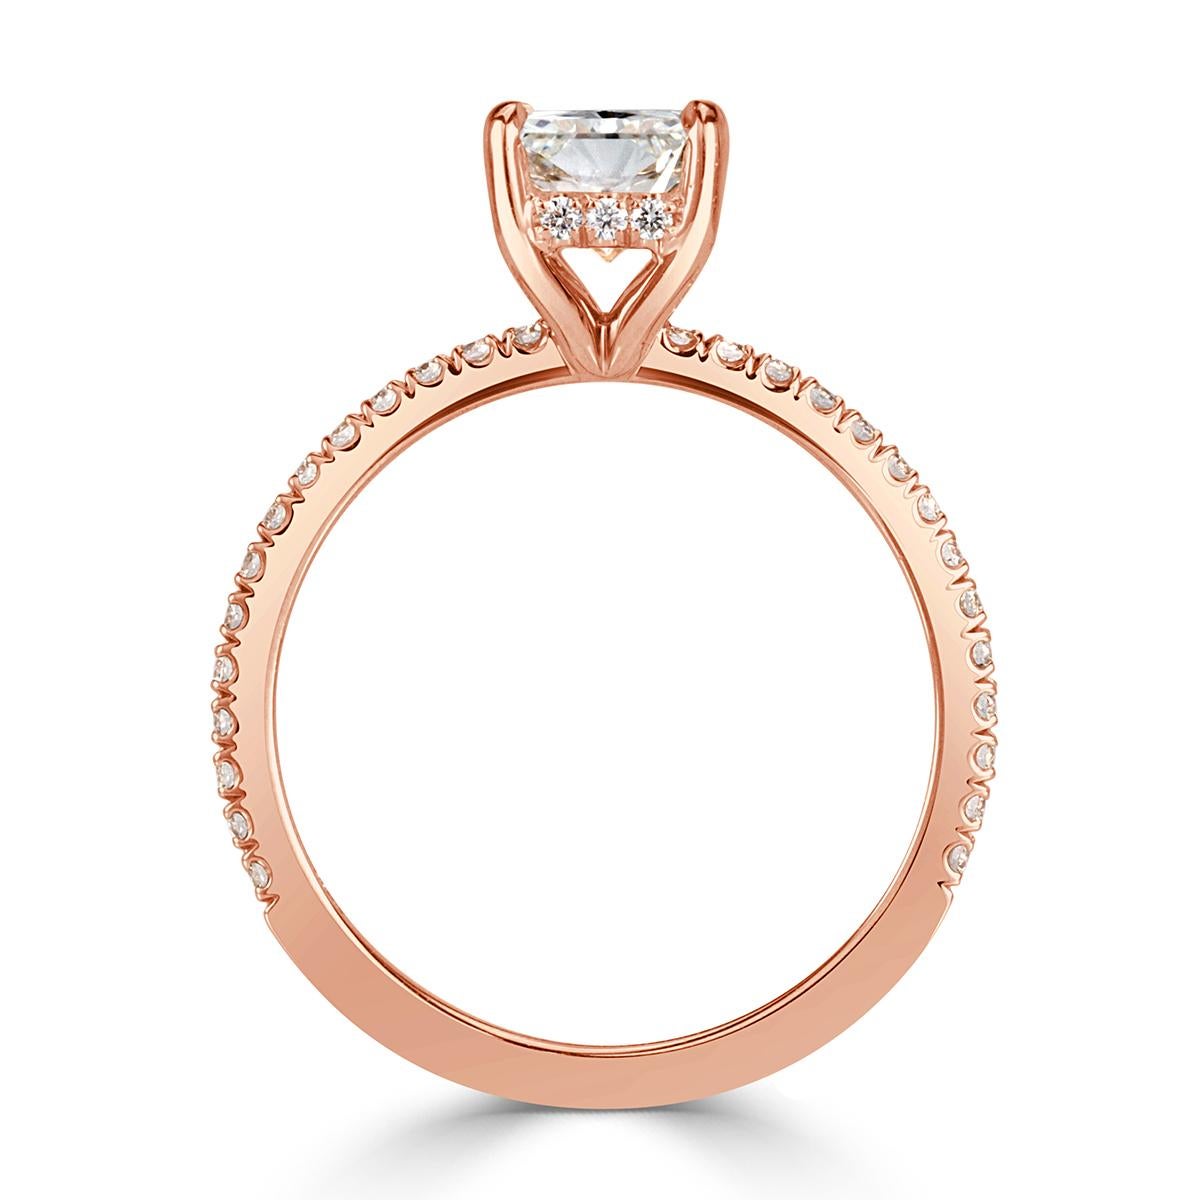 Women's or Men's Mark Broumand 1.62 Carat Radiant Cut Diamond Engagement Ring